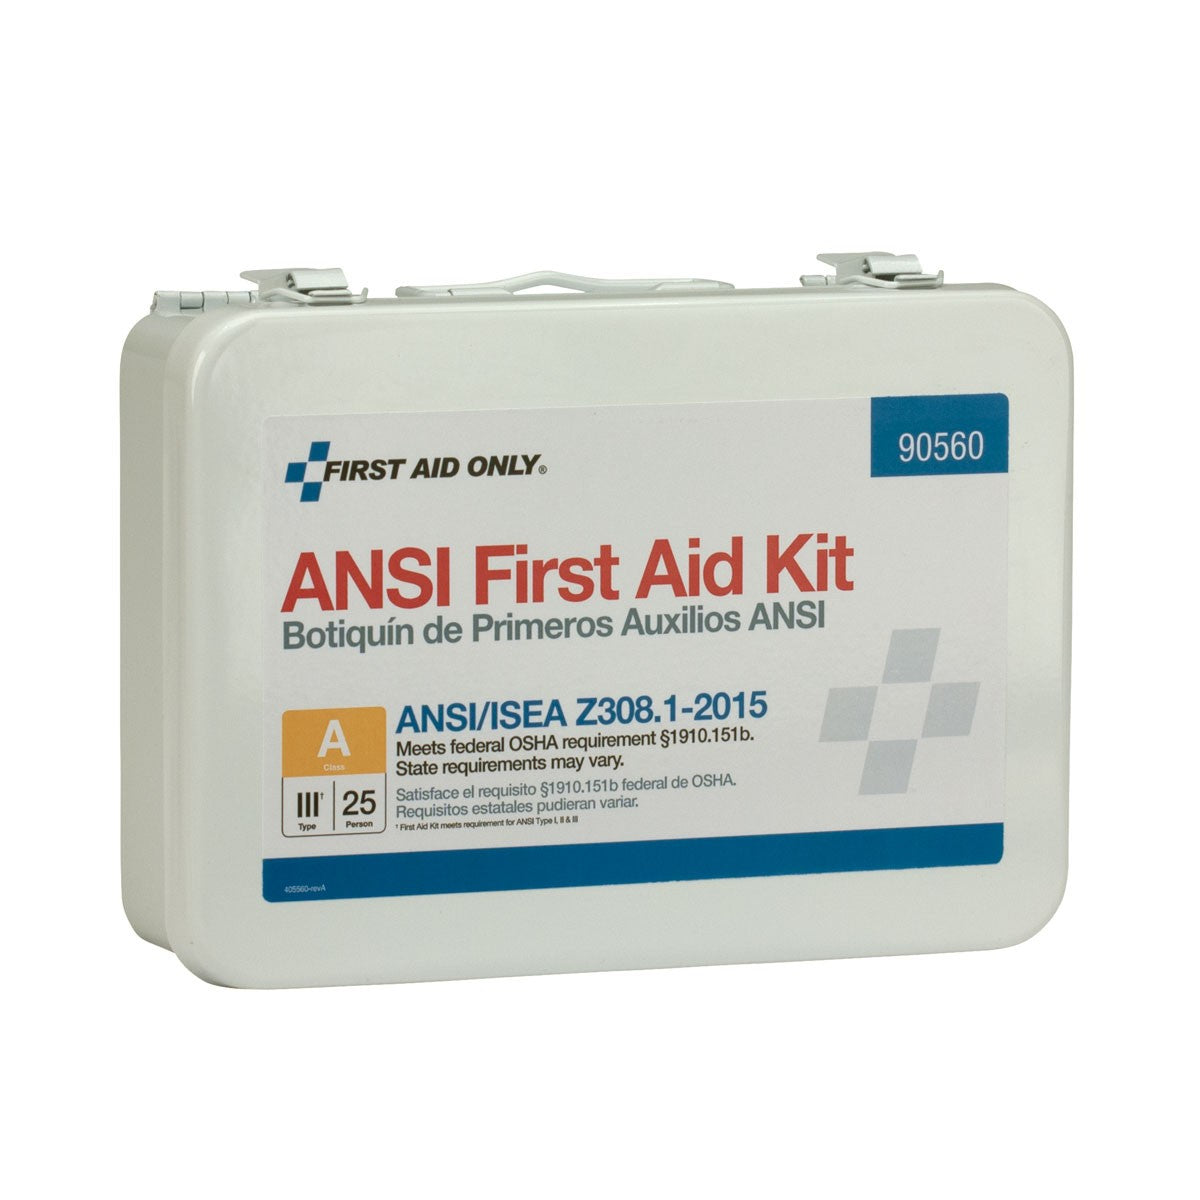 25 Person Bulk Metal First Aid Kit, ANSI Compliant - W-90560